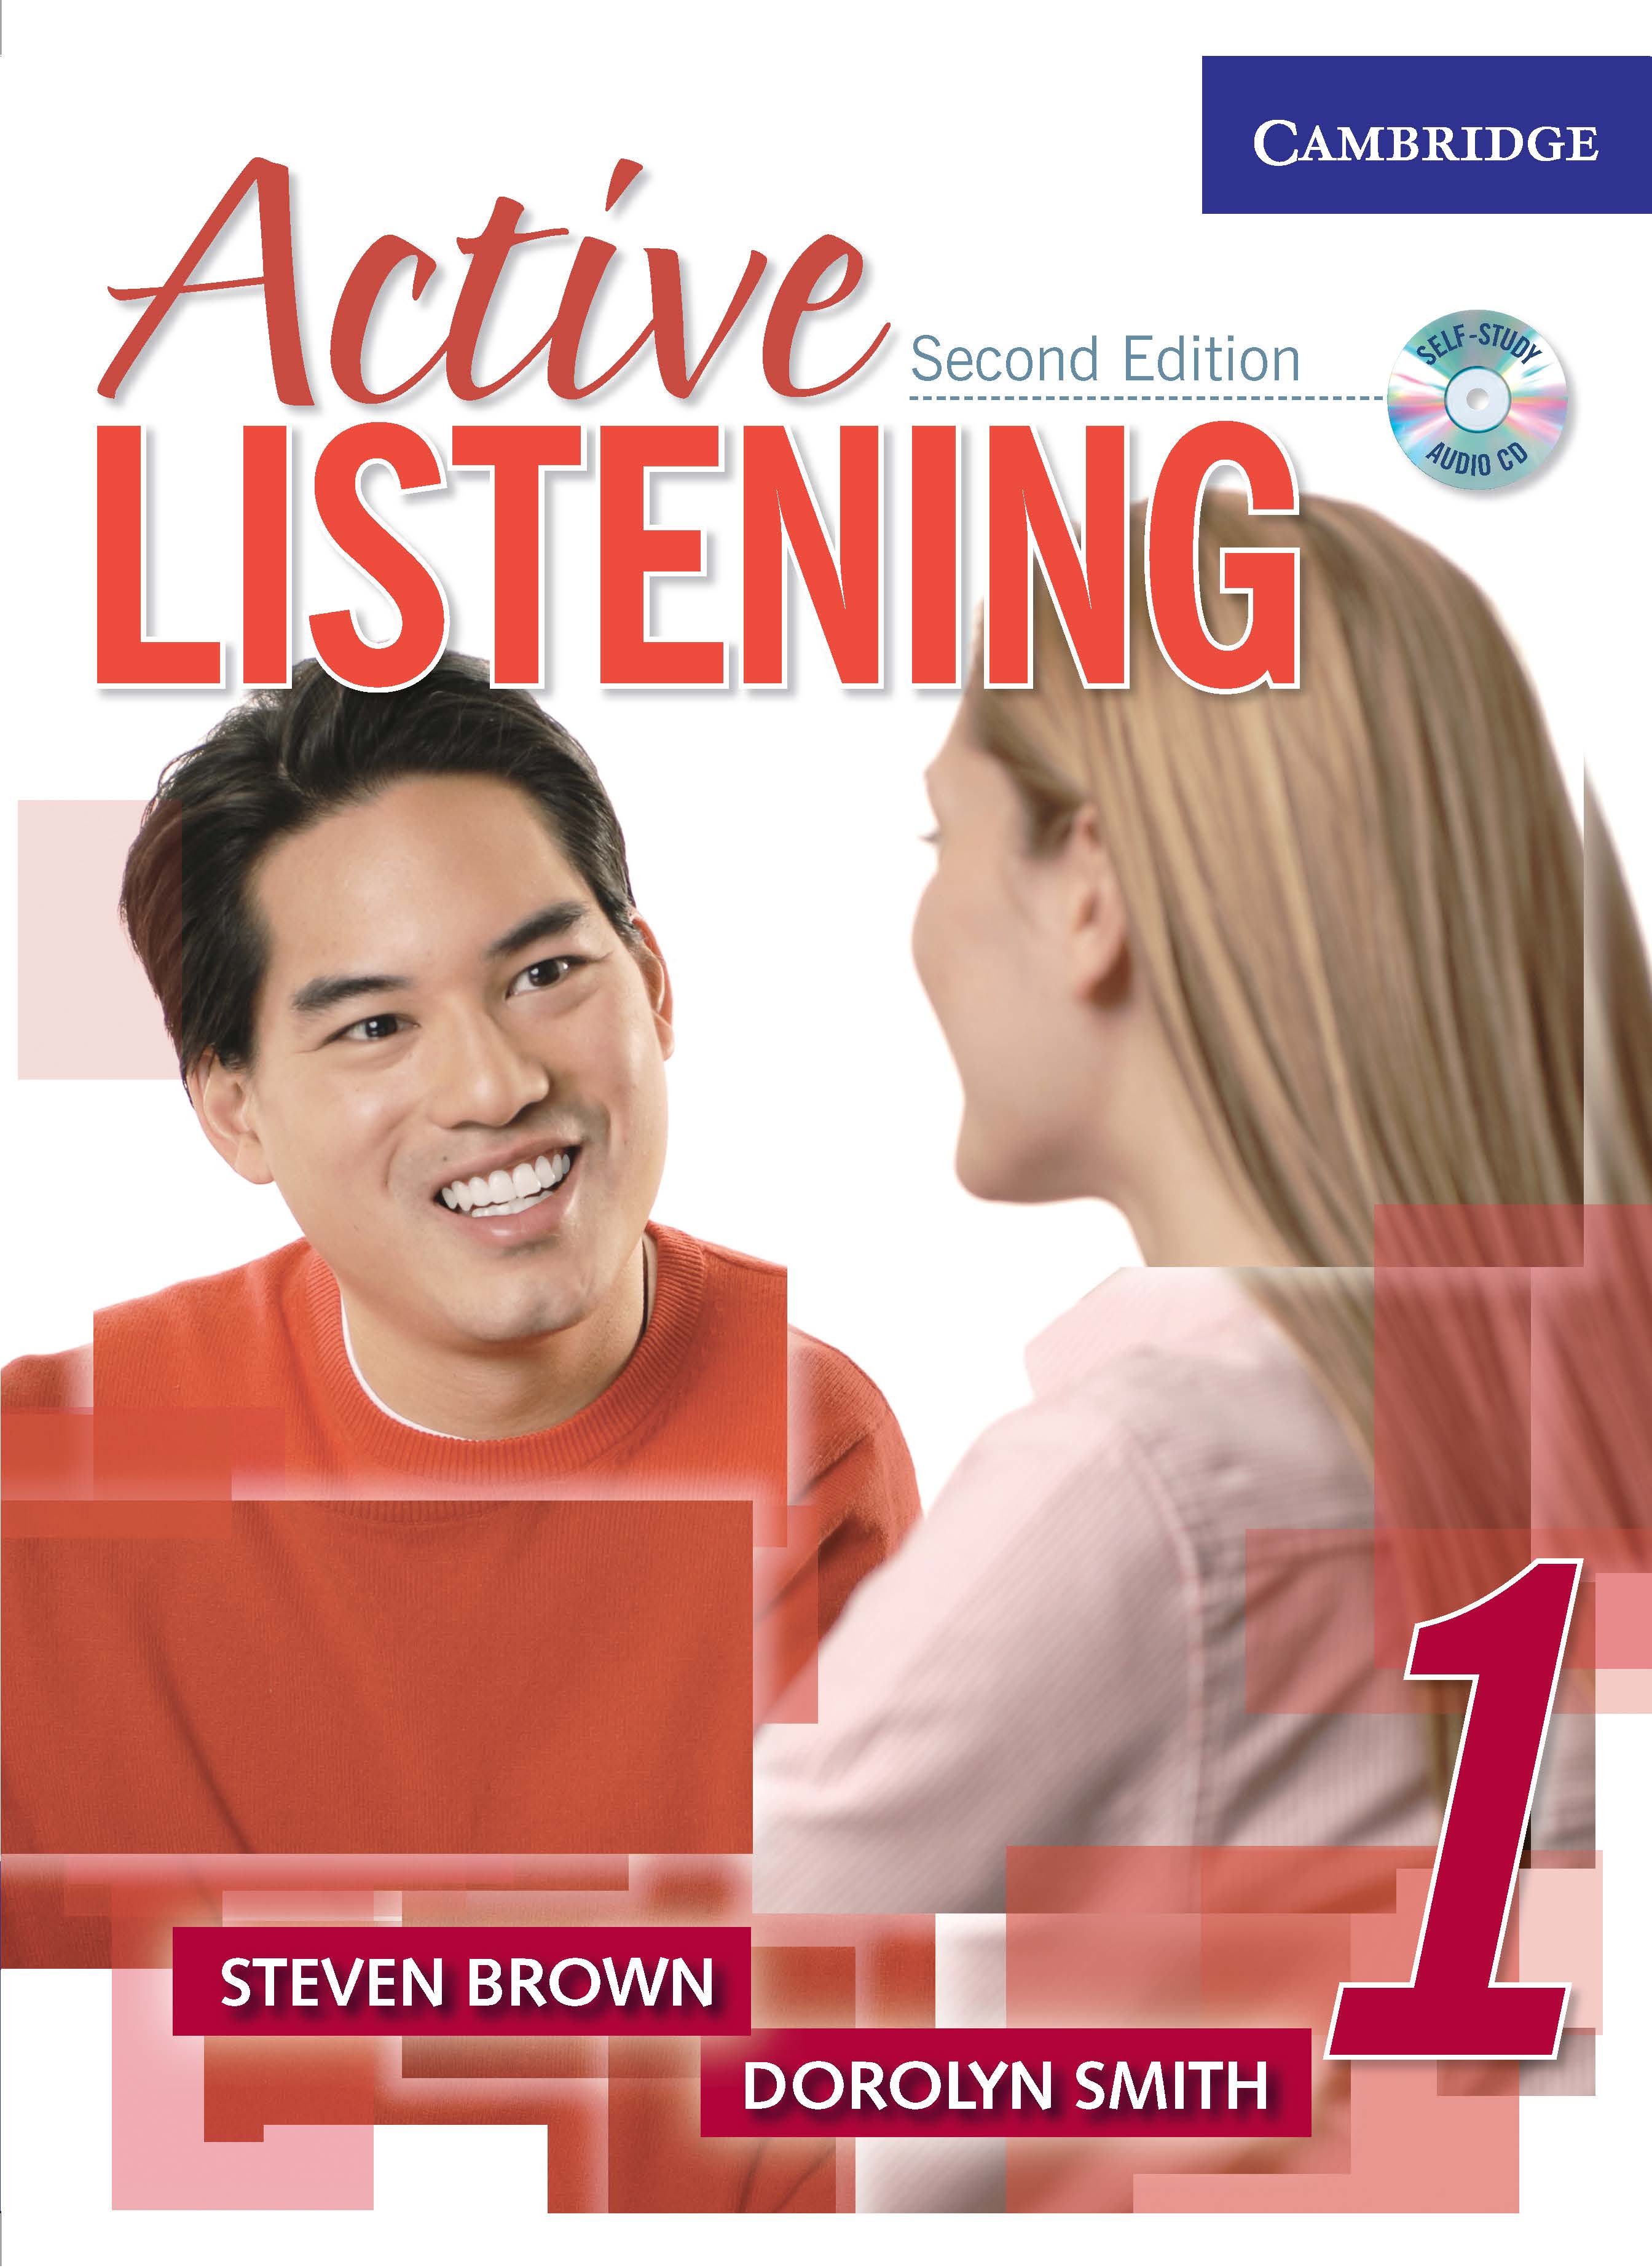 Active Listening Level 1